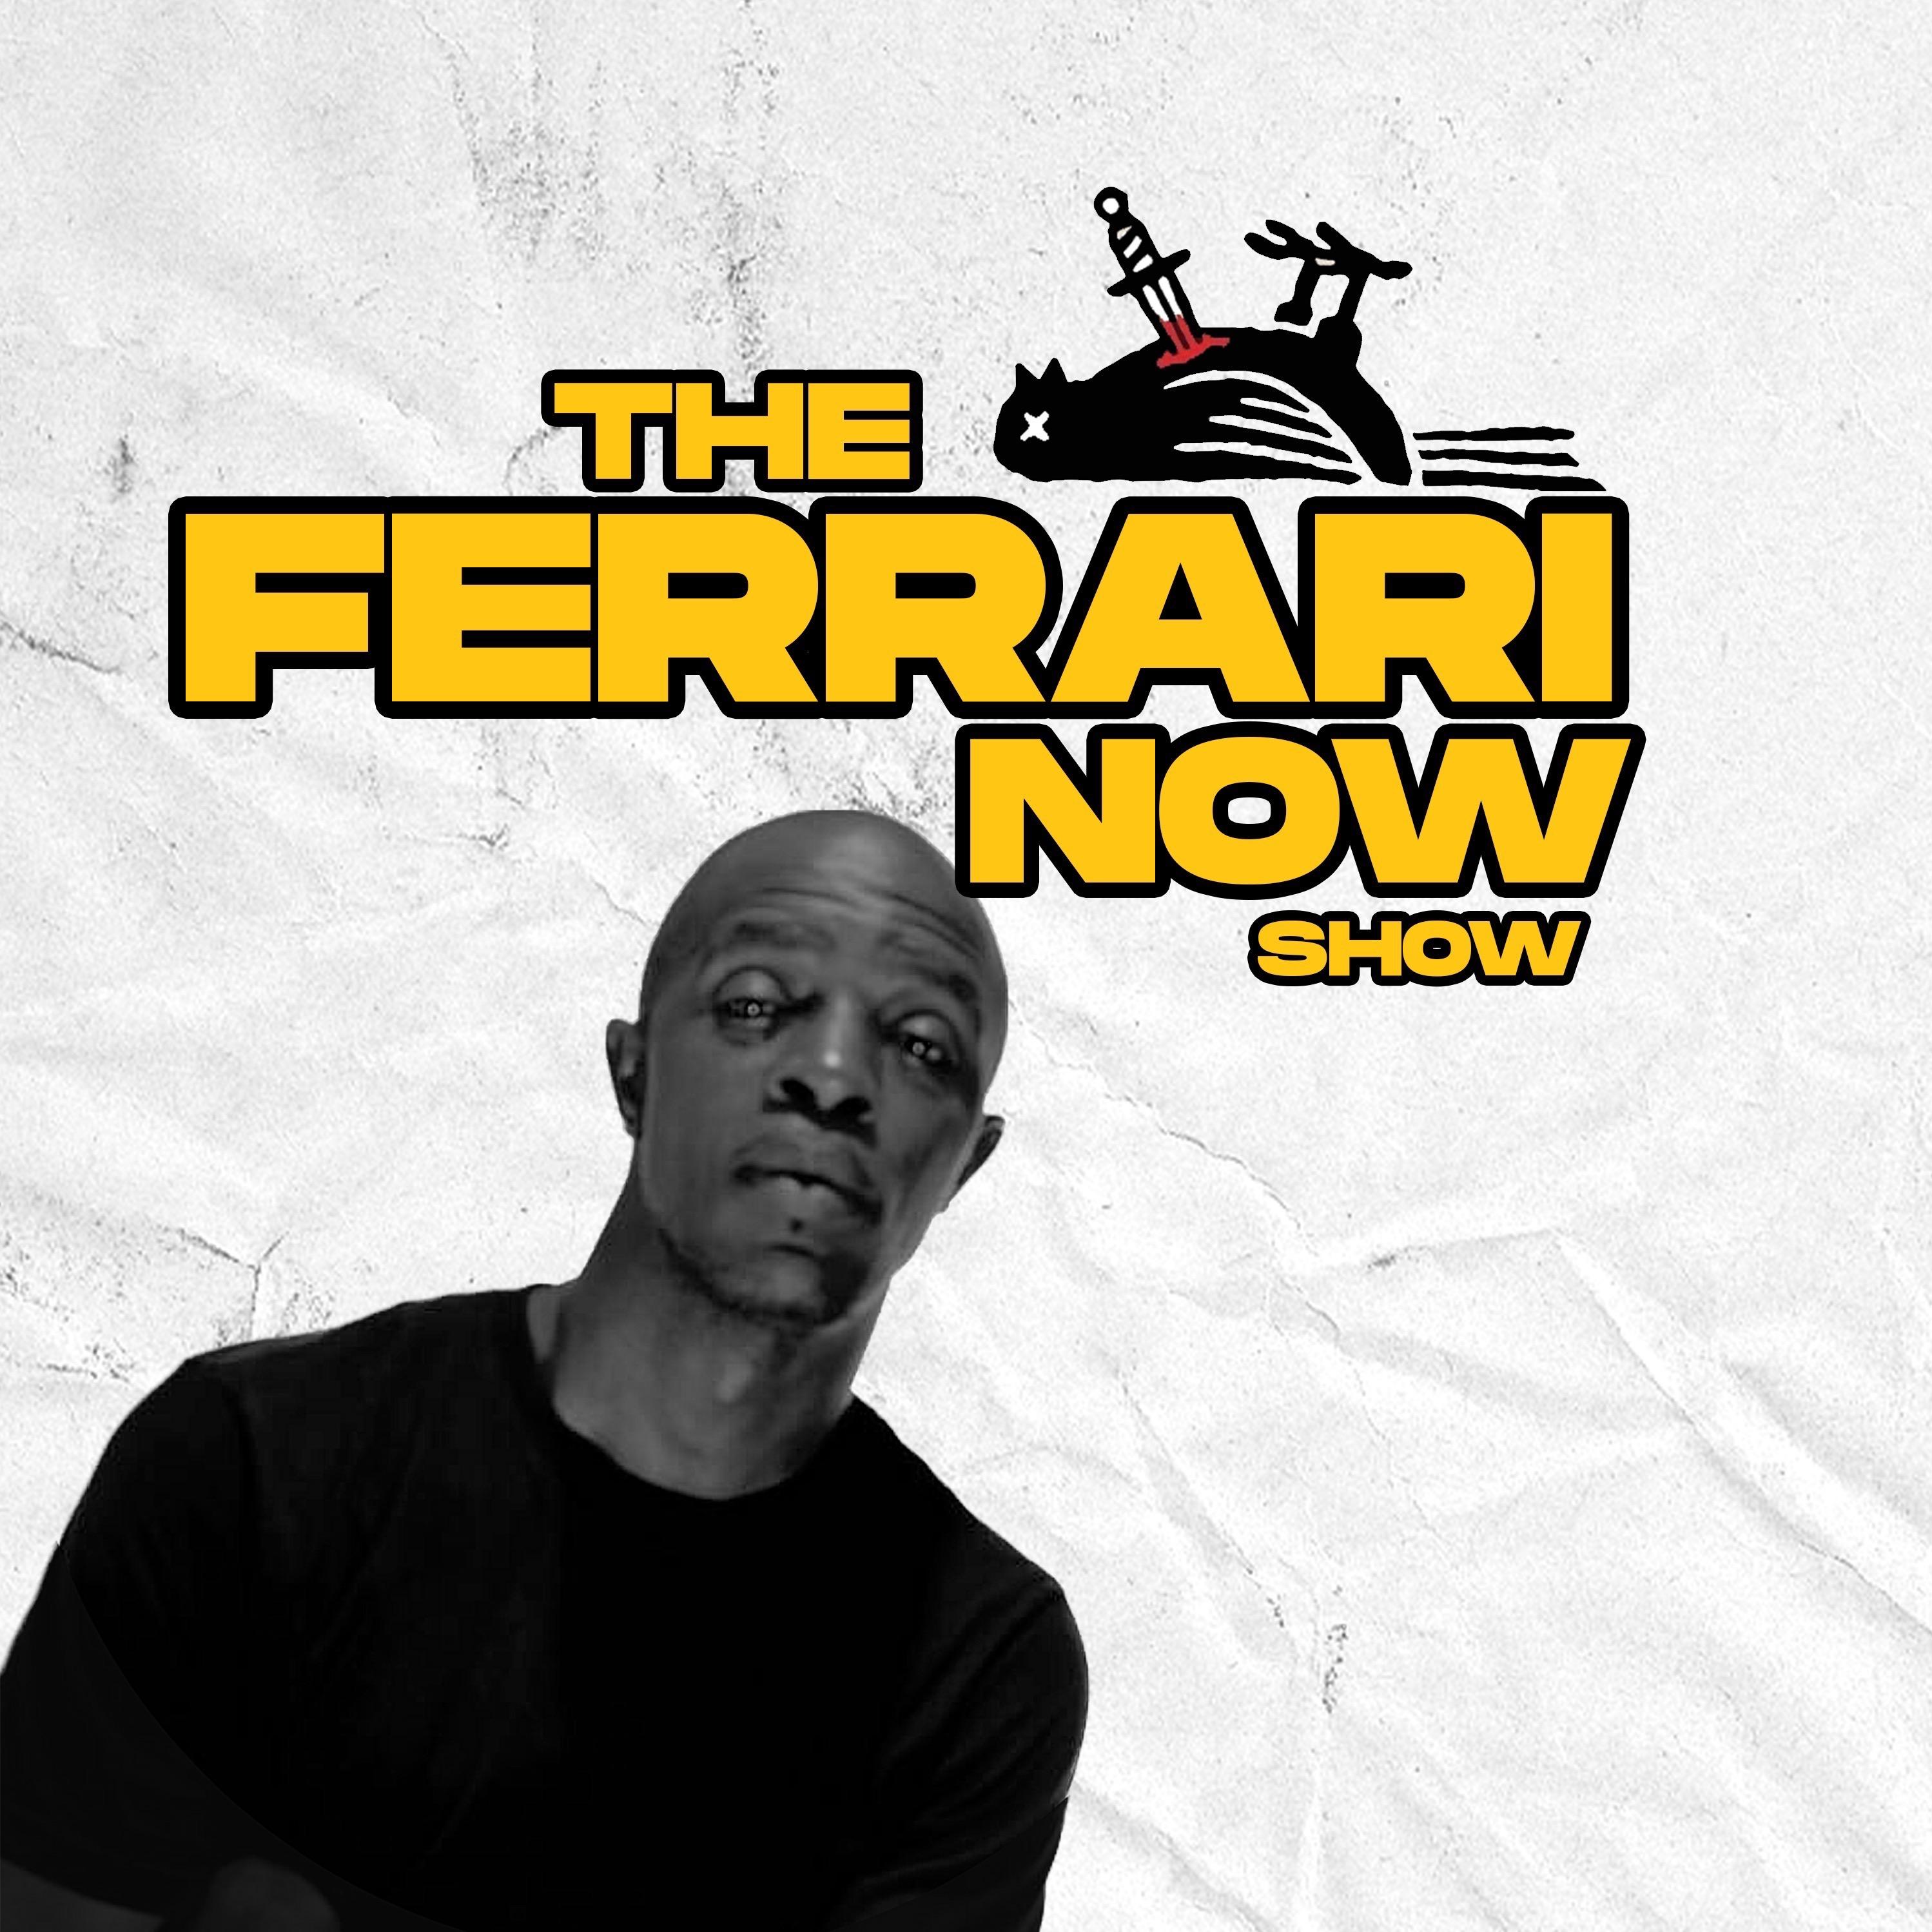 The FerrariNow Show